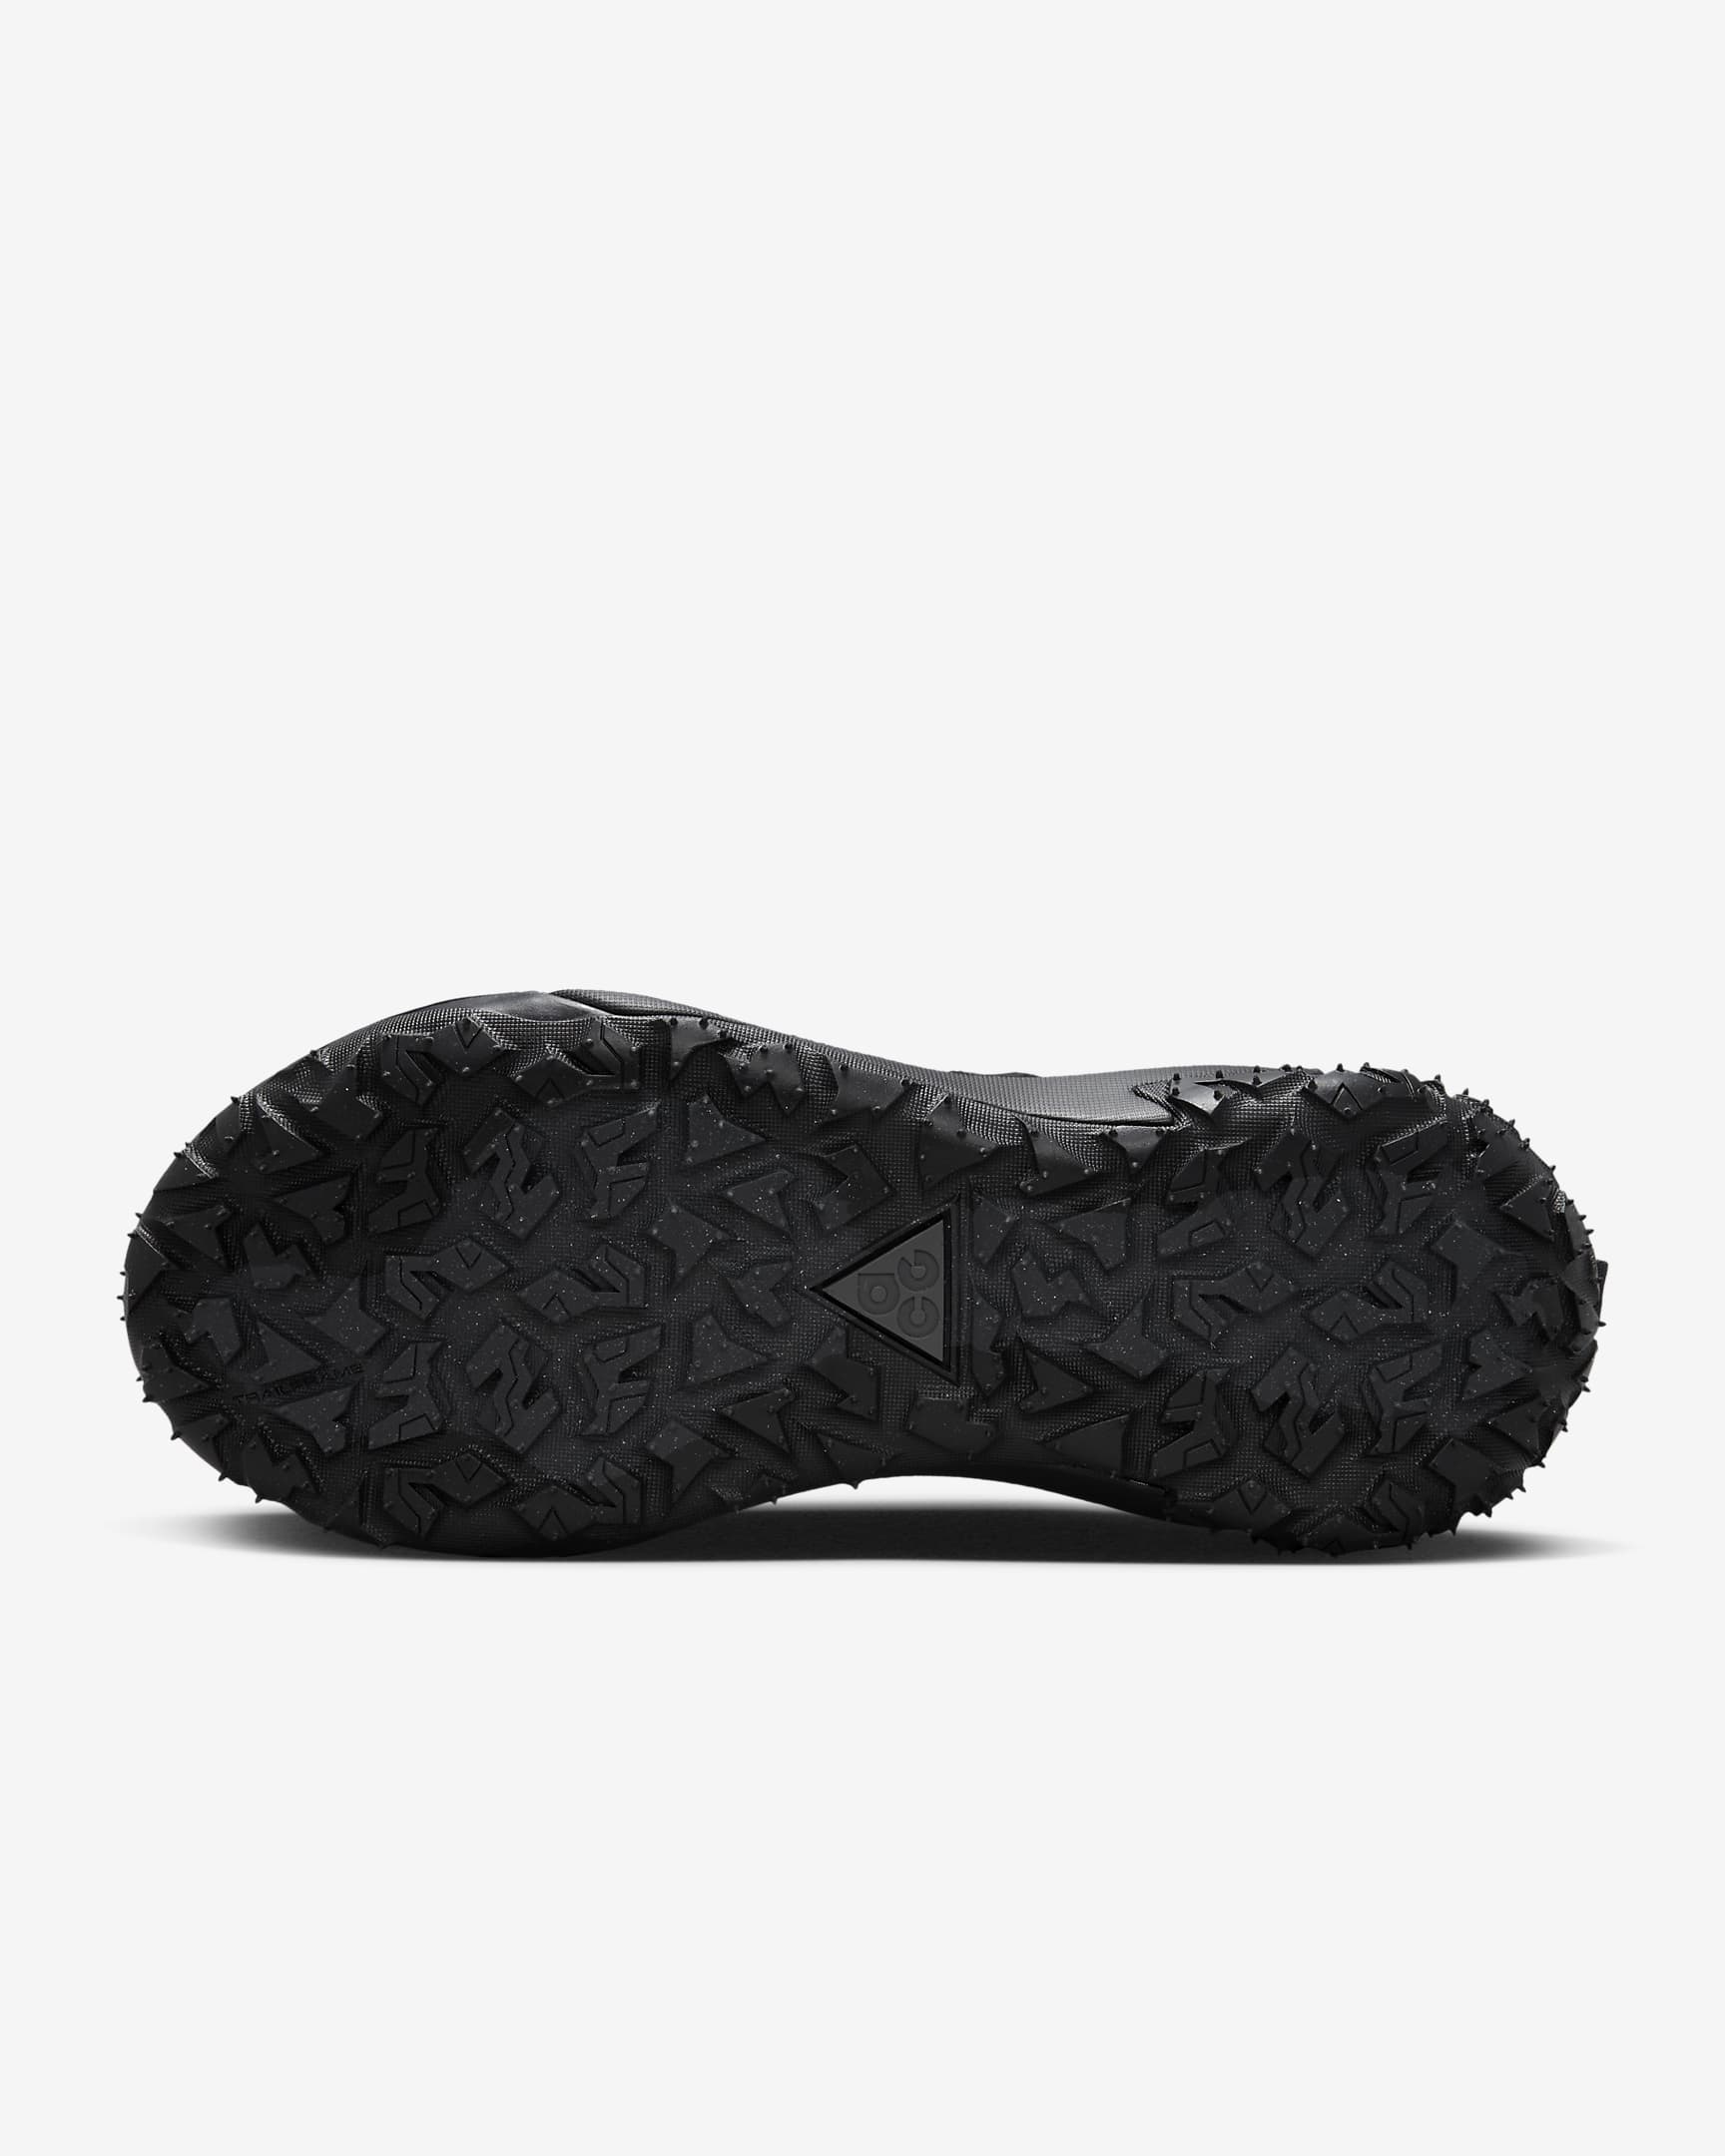 Nike ACG Mountain Fly 2 Low Men's Shoes - Black/Black/Black/Anthracite